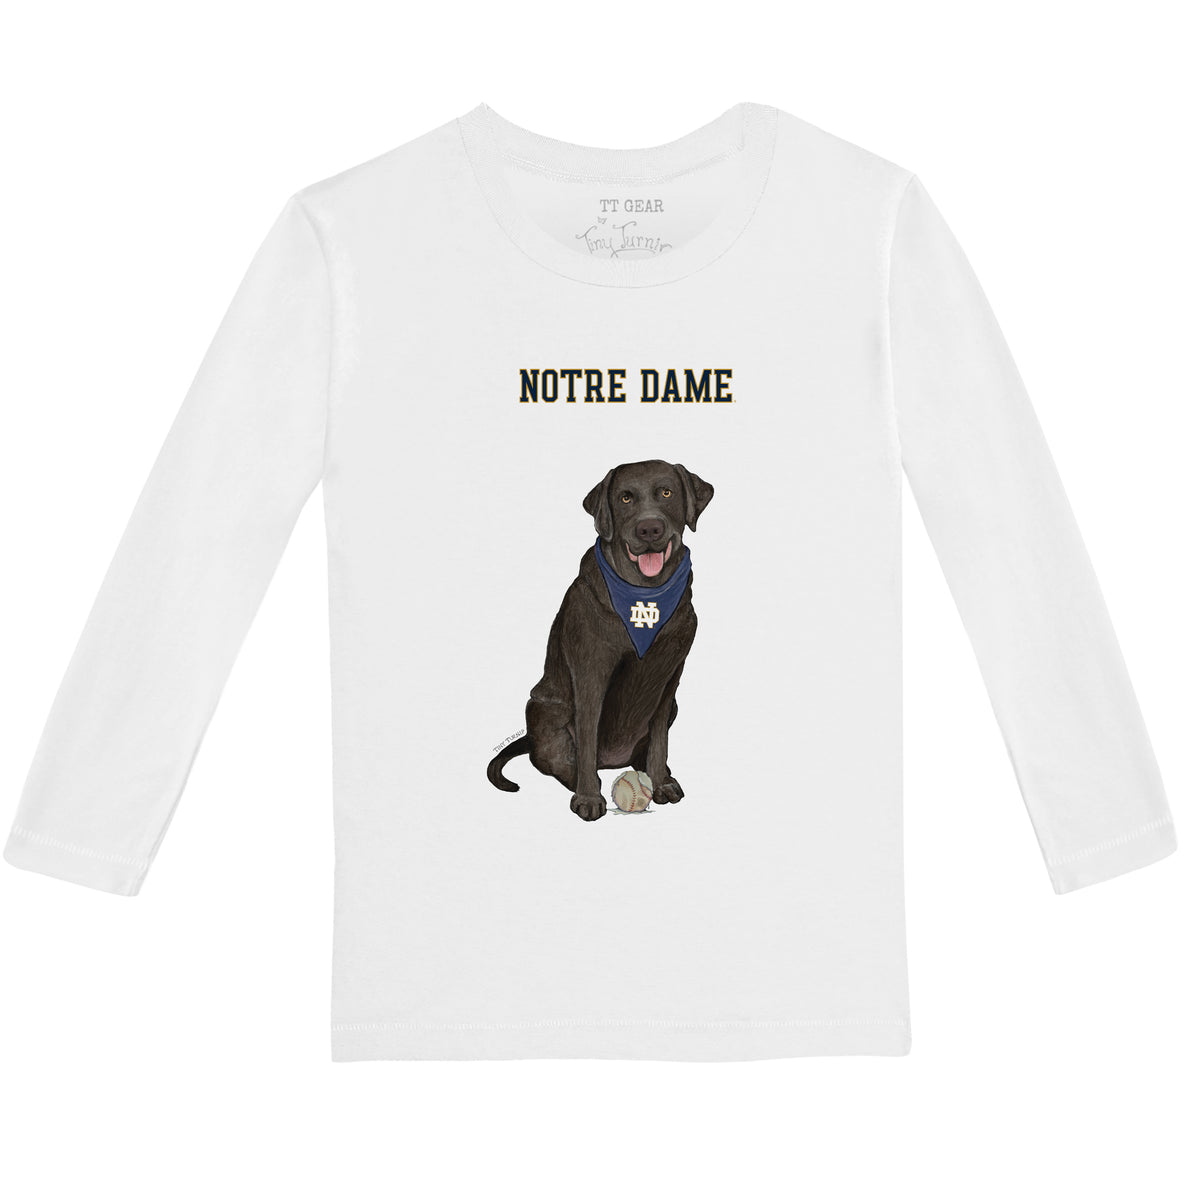 Notre Dame Fighting Irish Black Labrador Retriever Long-Sleeve Tee Shirt